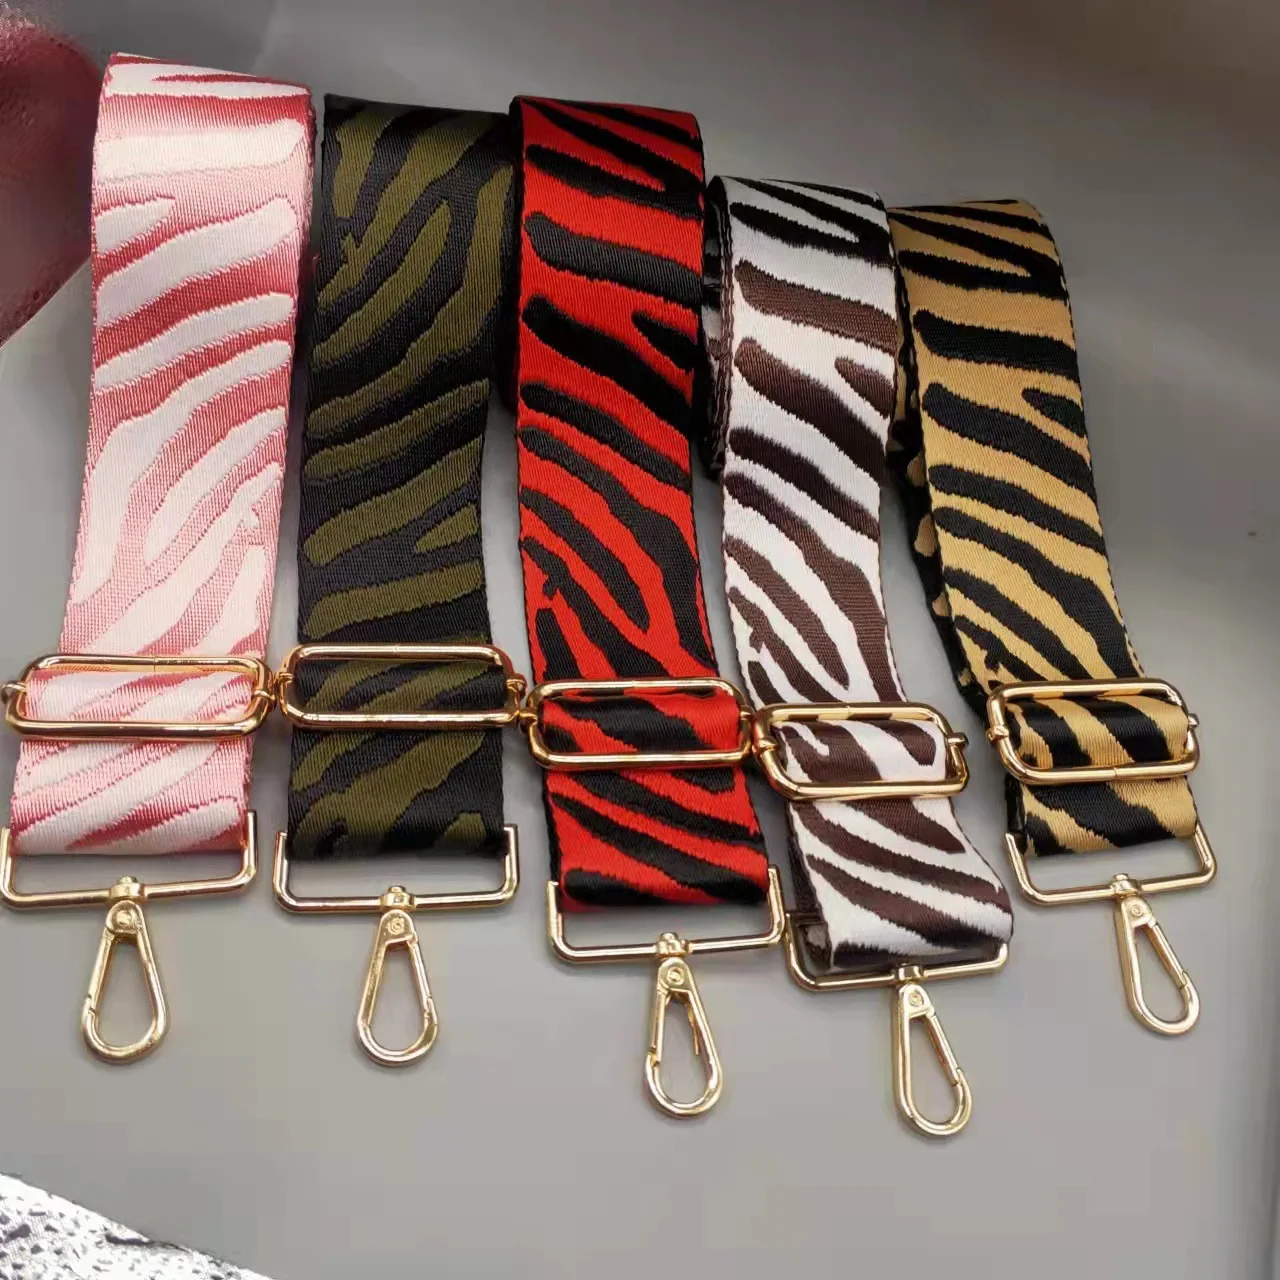 5cm Wide Bag Chain Replacement Wallet Shoulder Strap Crossbody Strap Wallet Accessory Colorful Zebra Camo Print